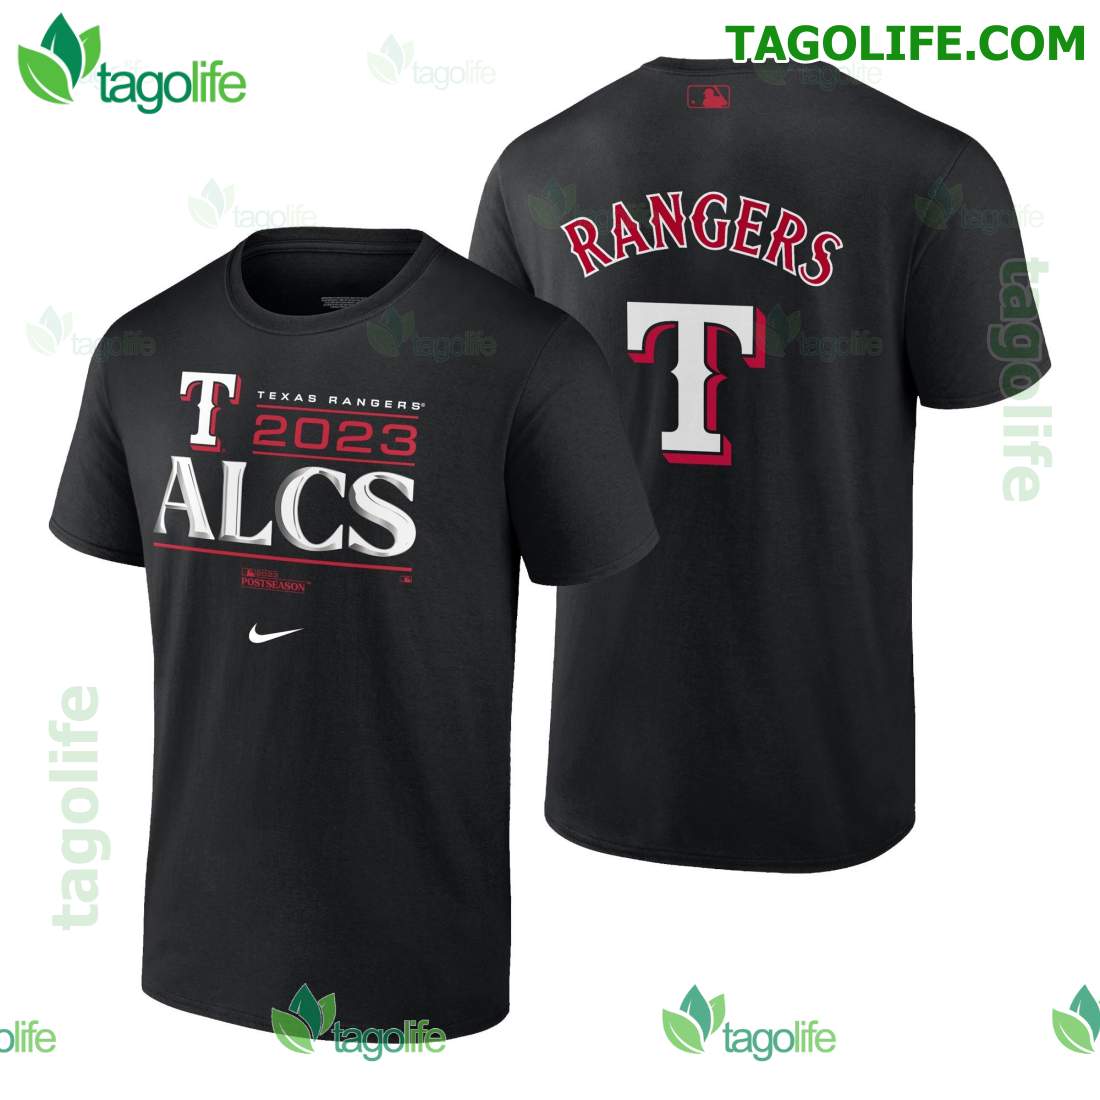 Texas Rangers ALCS T-shirt - Tagolife